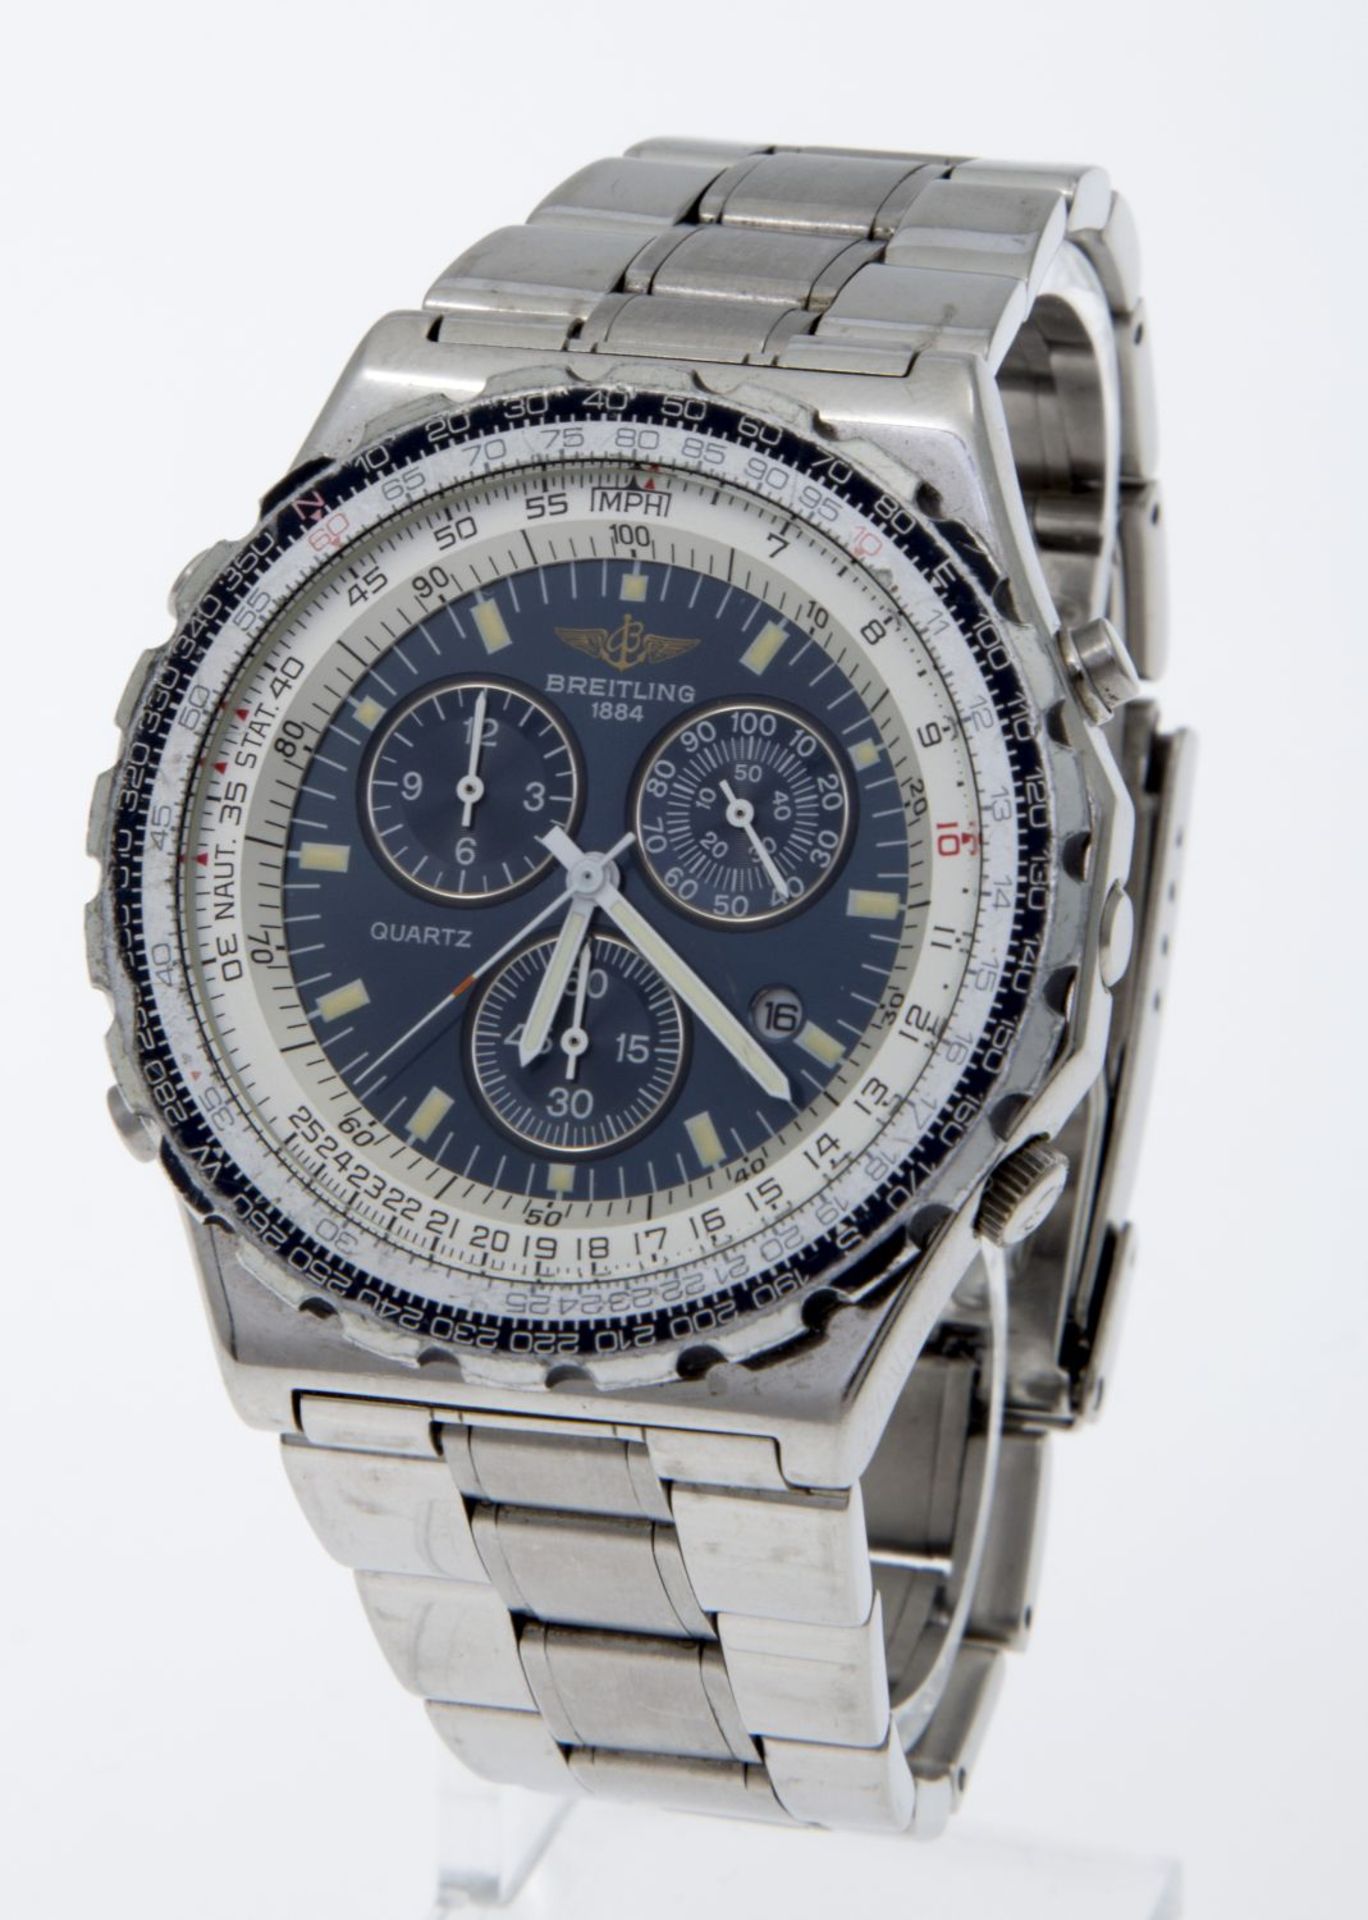 Breitling-Armbanduhr "Jupiter Pilot" mit Chronograph